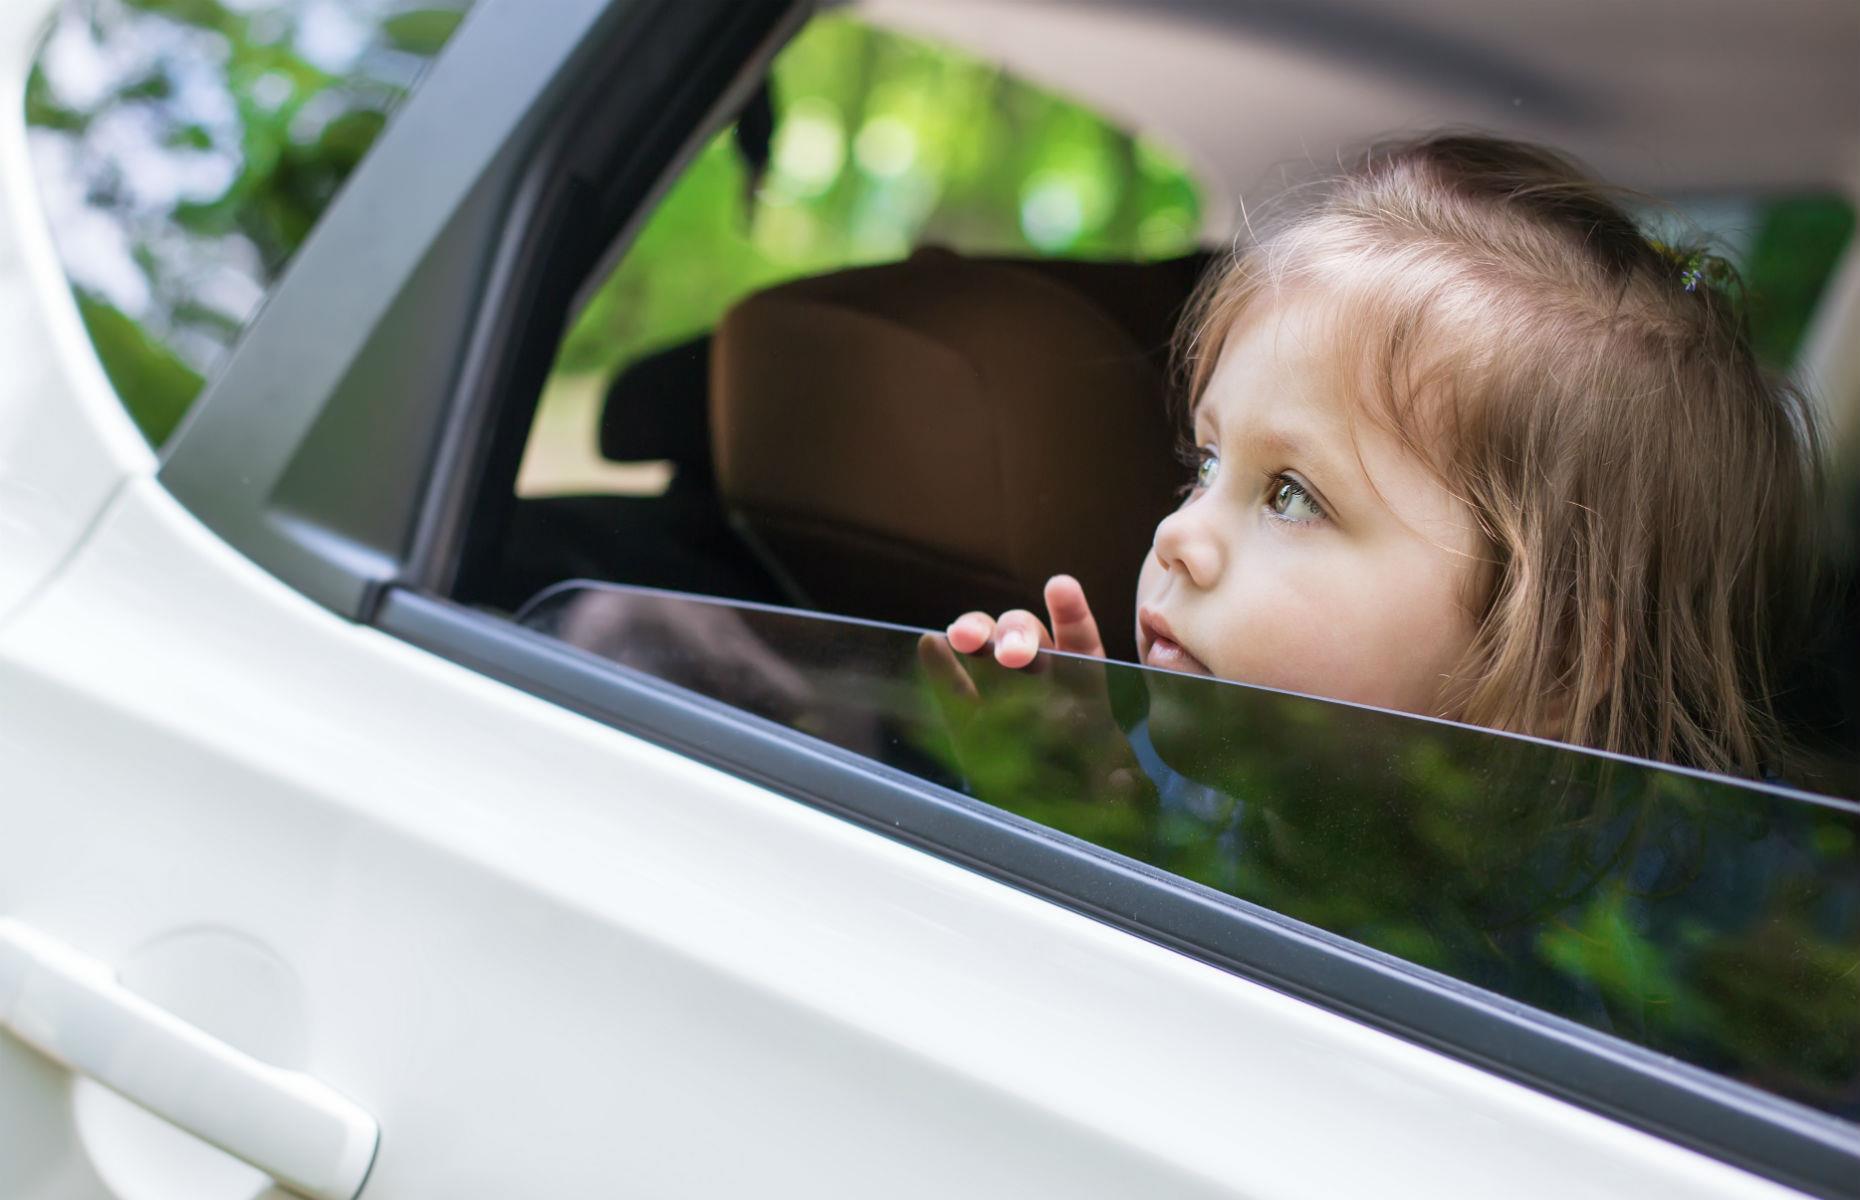 Canada: leaving your car windows open – $64 (£45) fine